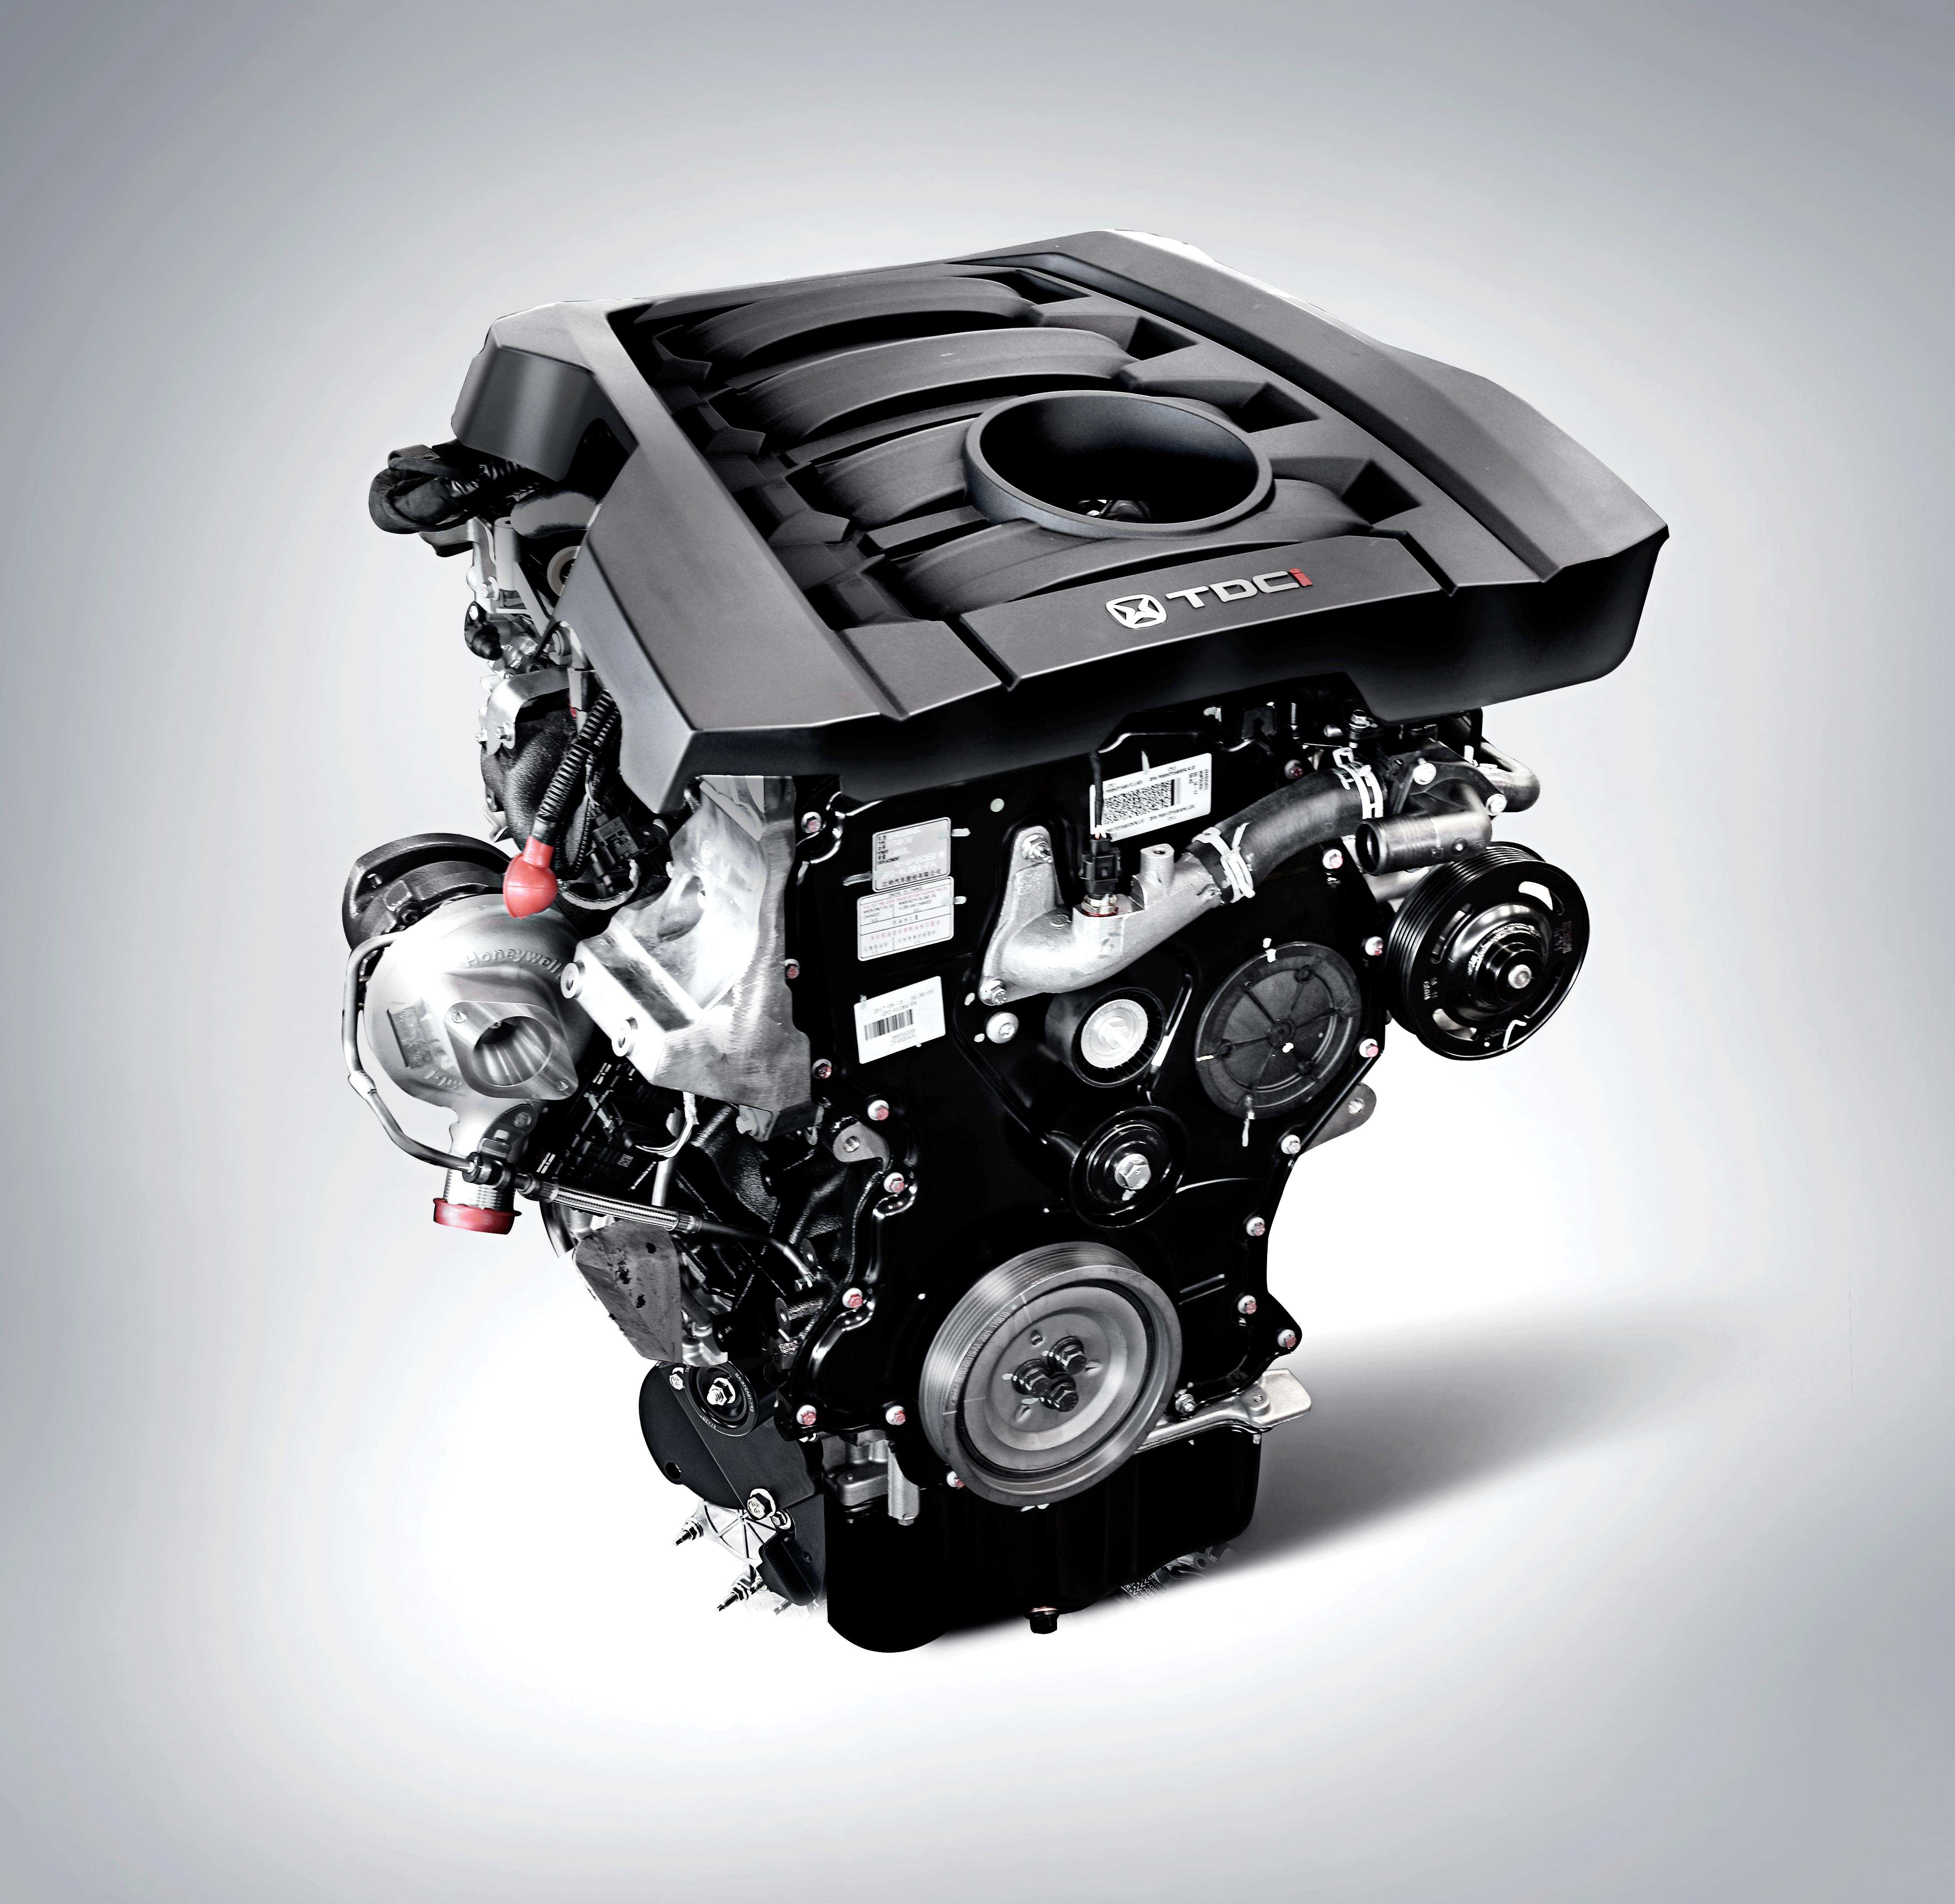 0t topanther柴油发动机具有动力更强劲,油耗更经济,品质更耐用